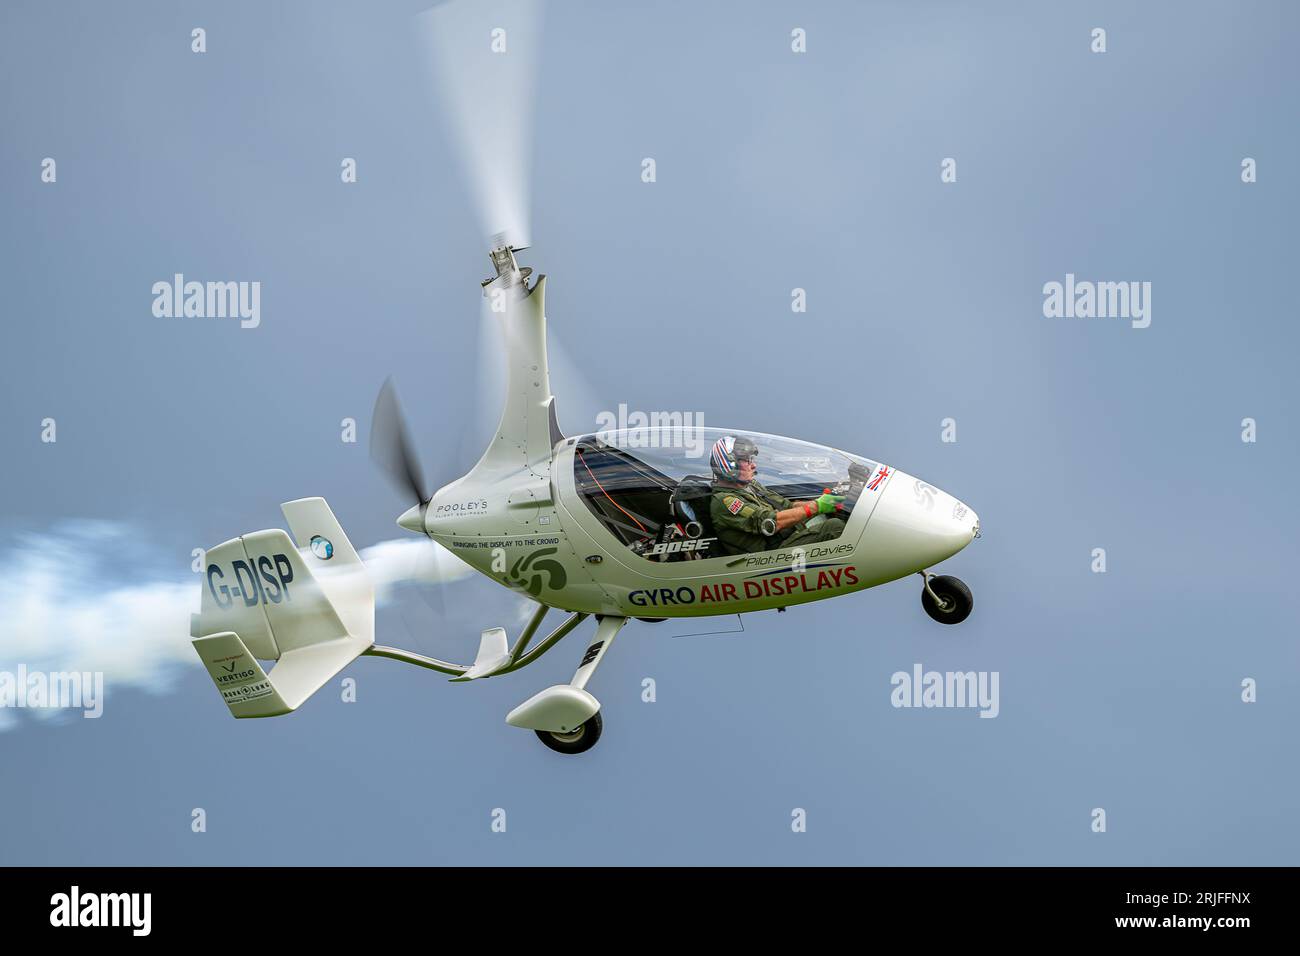 RotorSport Calidus, Gyro Air Displays Stock Photo